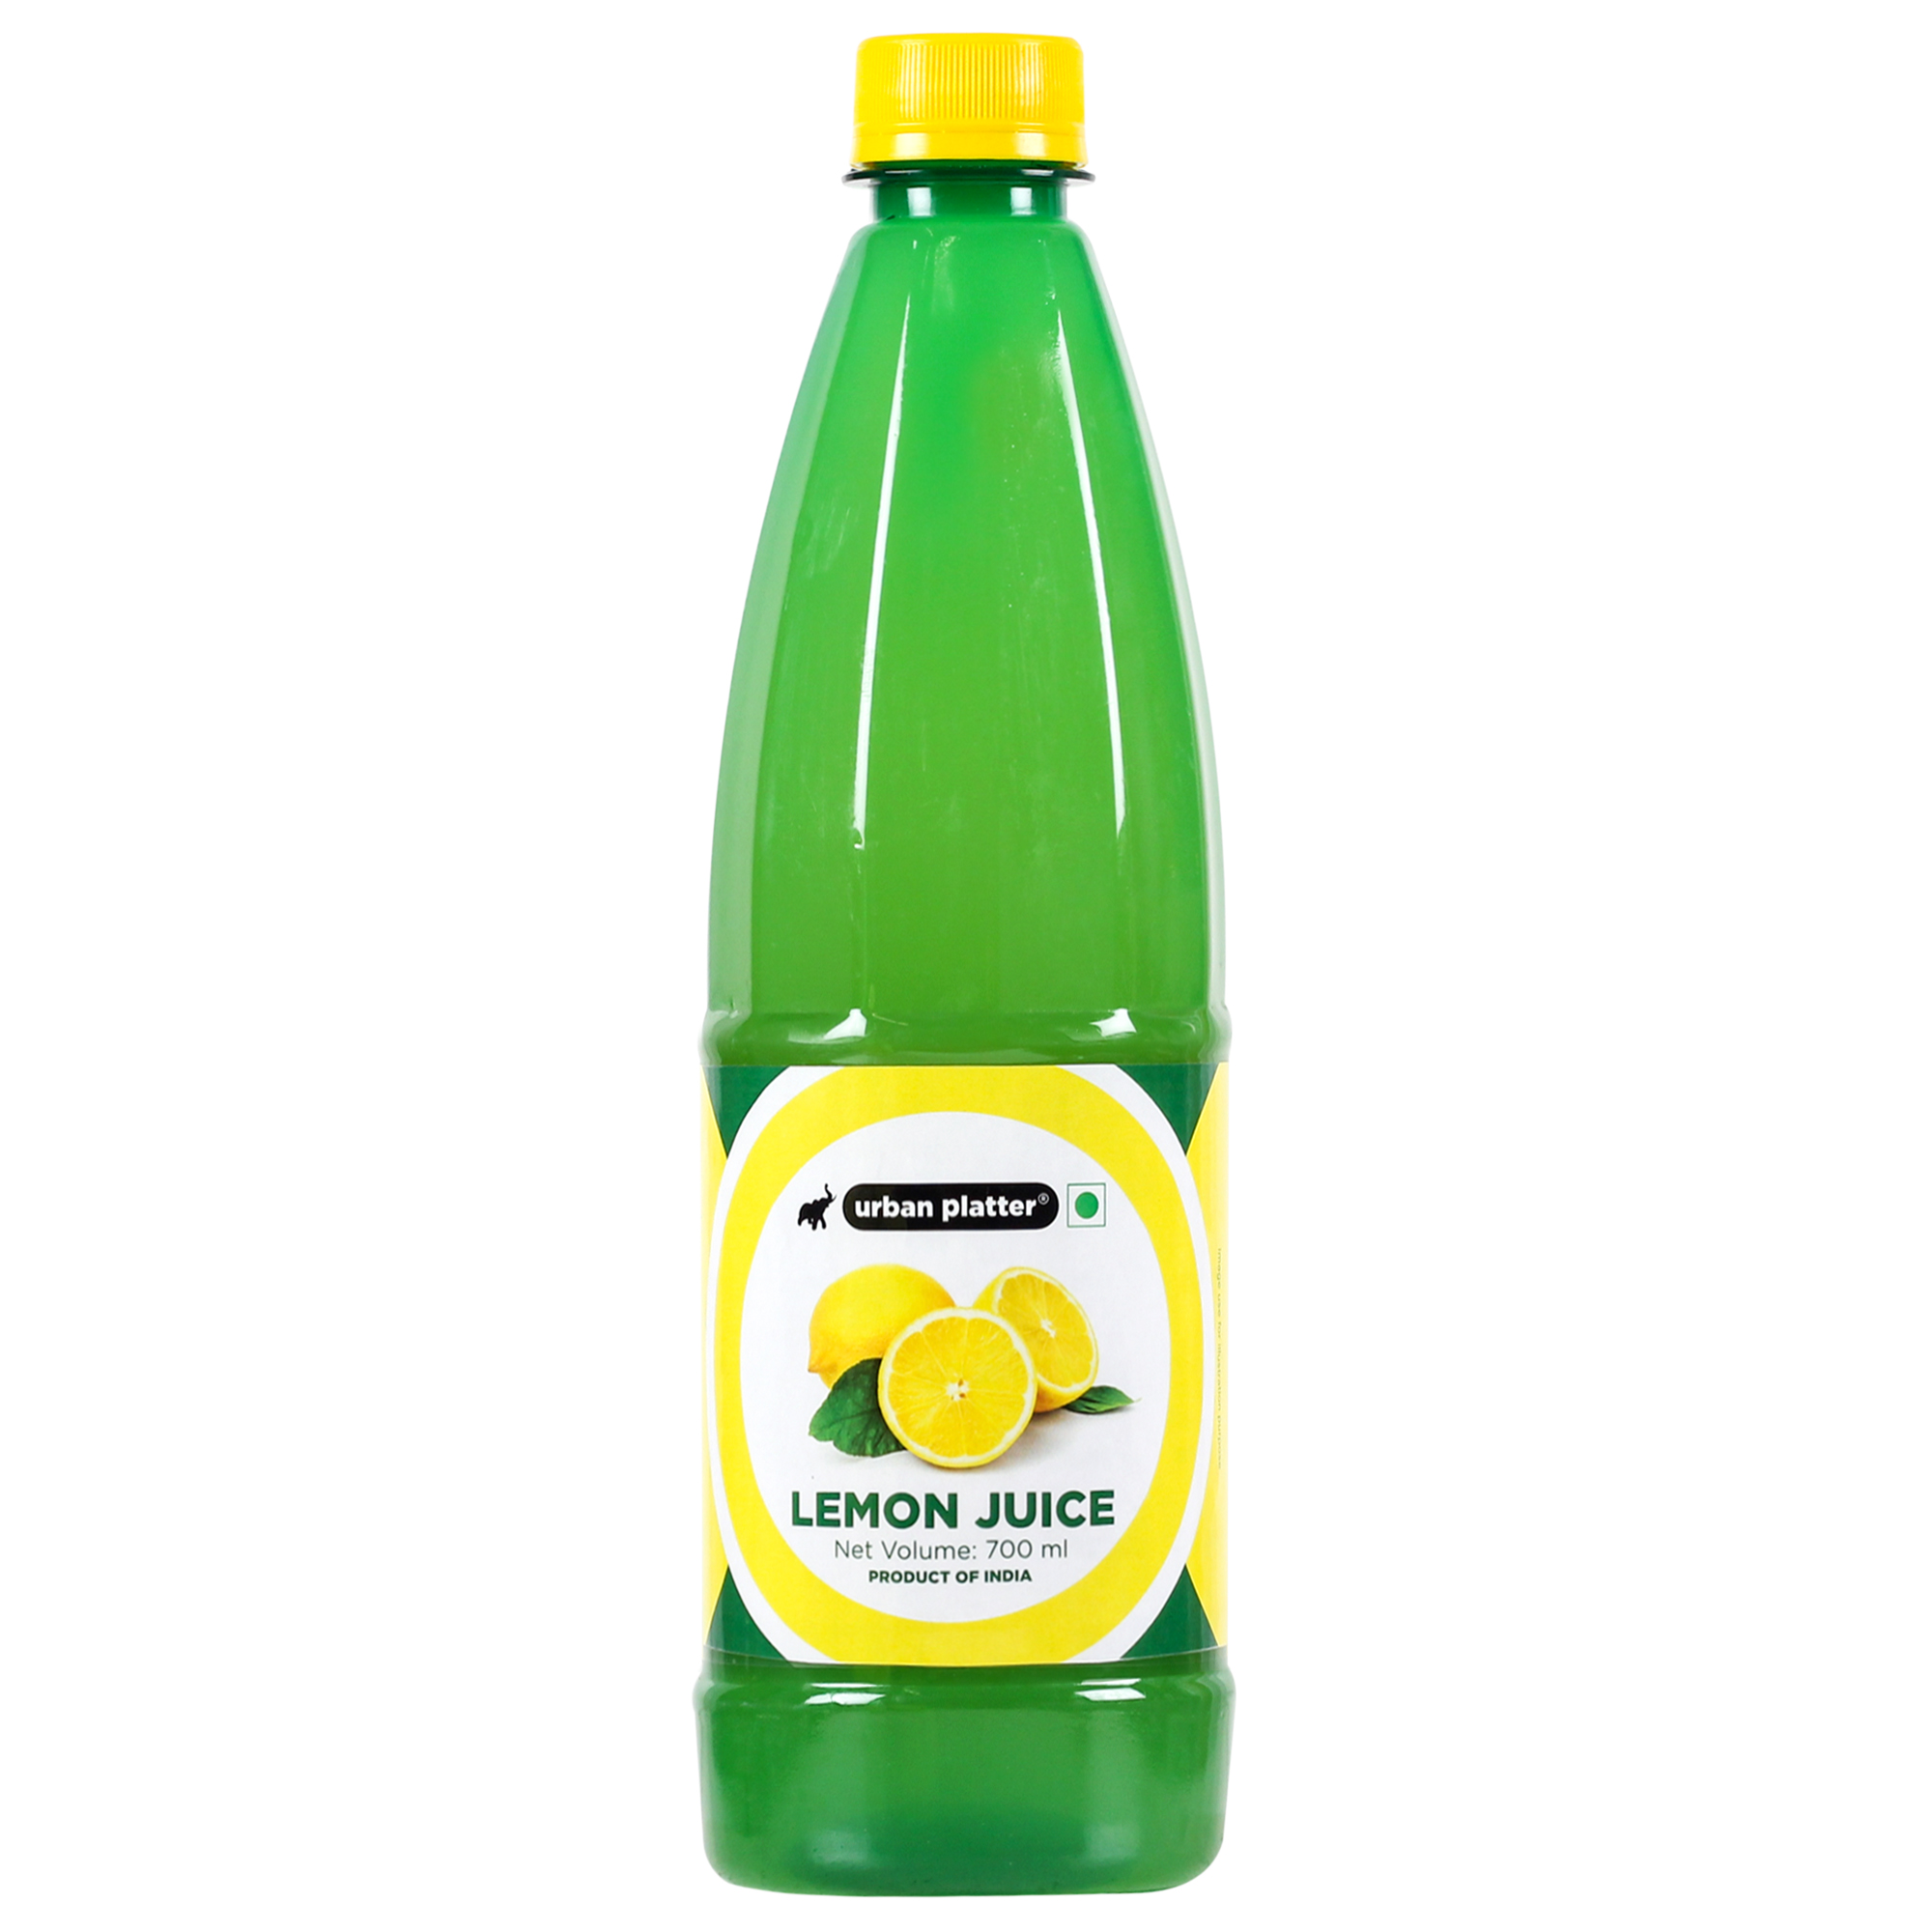 Best Lemon Juice Clearance Buy, Save 52% | jlcatj.gob.mx